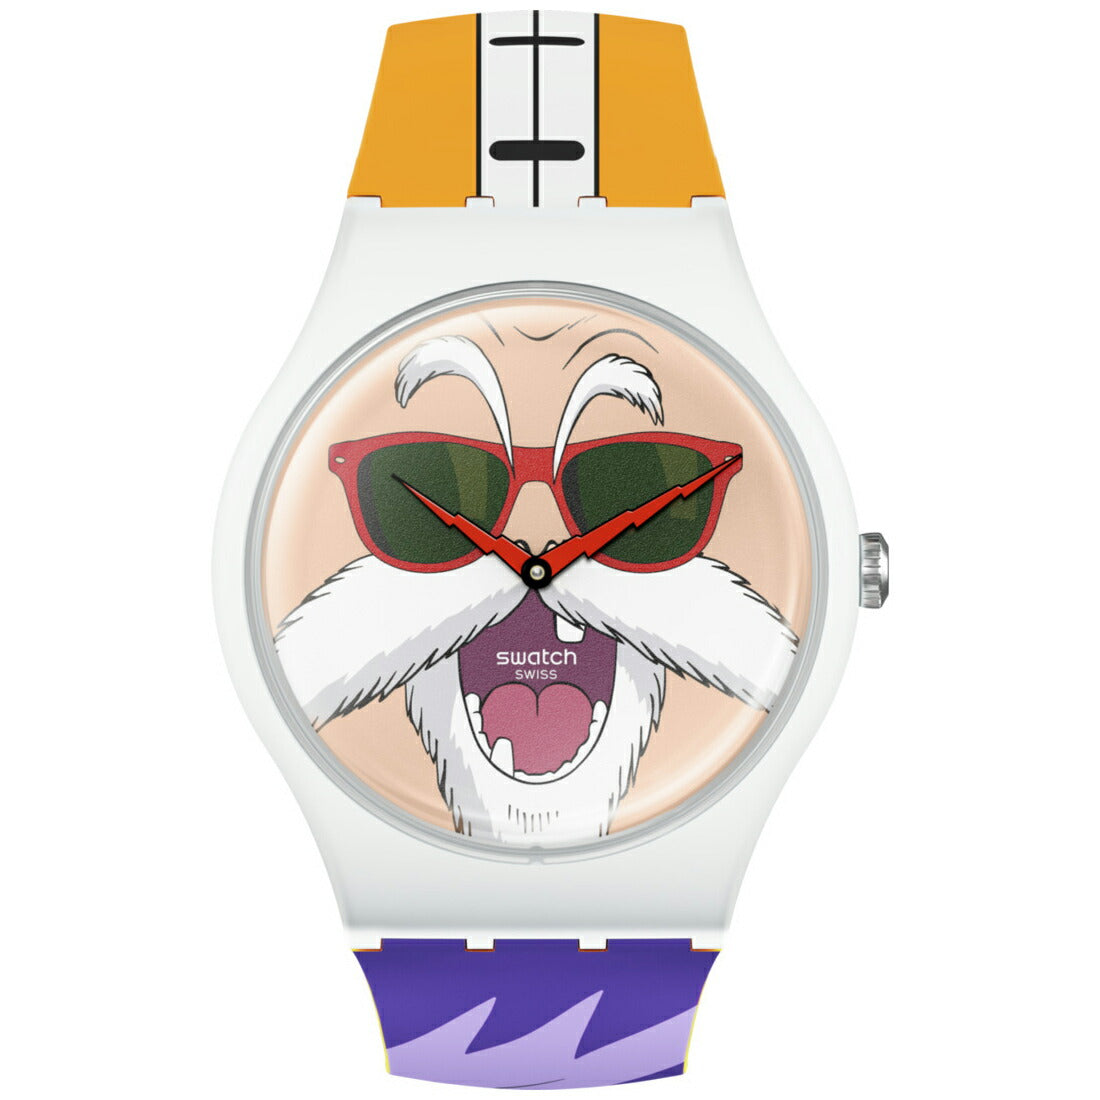 swatch スウォッチ ドラゴンボールZ コラボモデル 亀仙人 DRAGONBALL Z KAMESENNIN 腕時計 SUOZ346